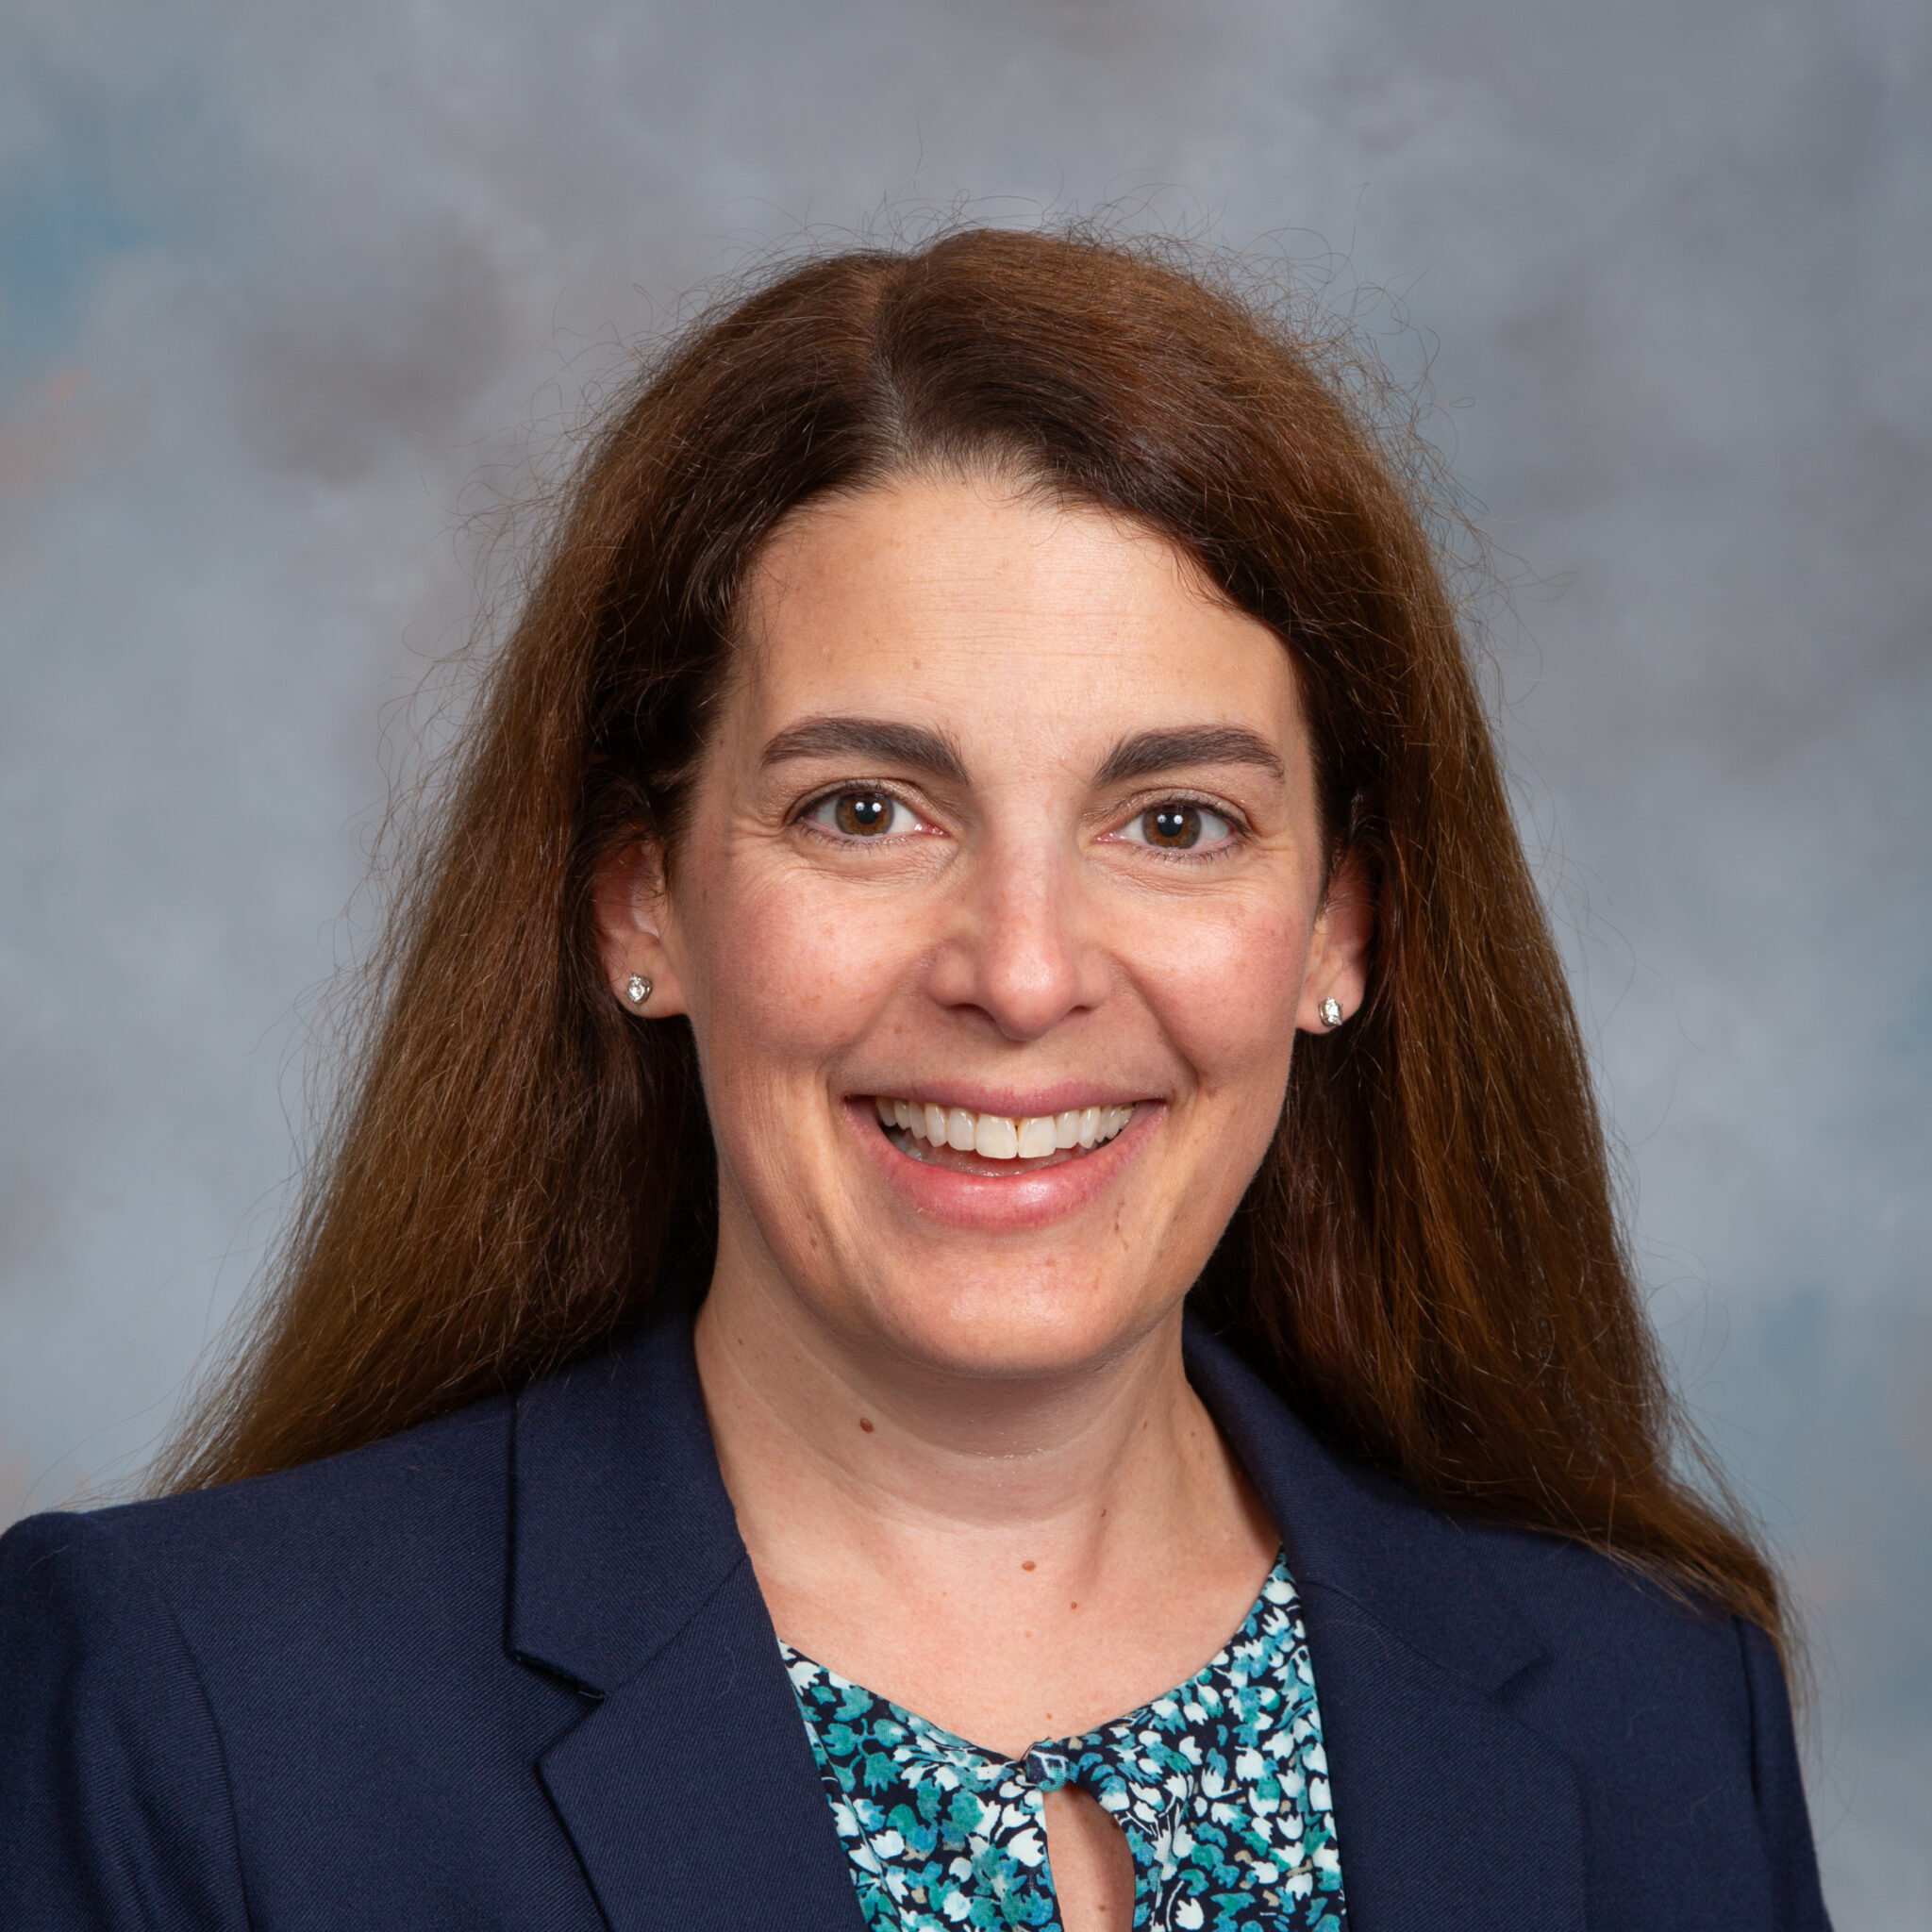 Principal Carolyn Fink